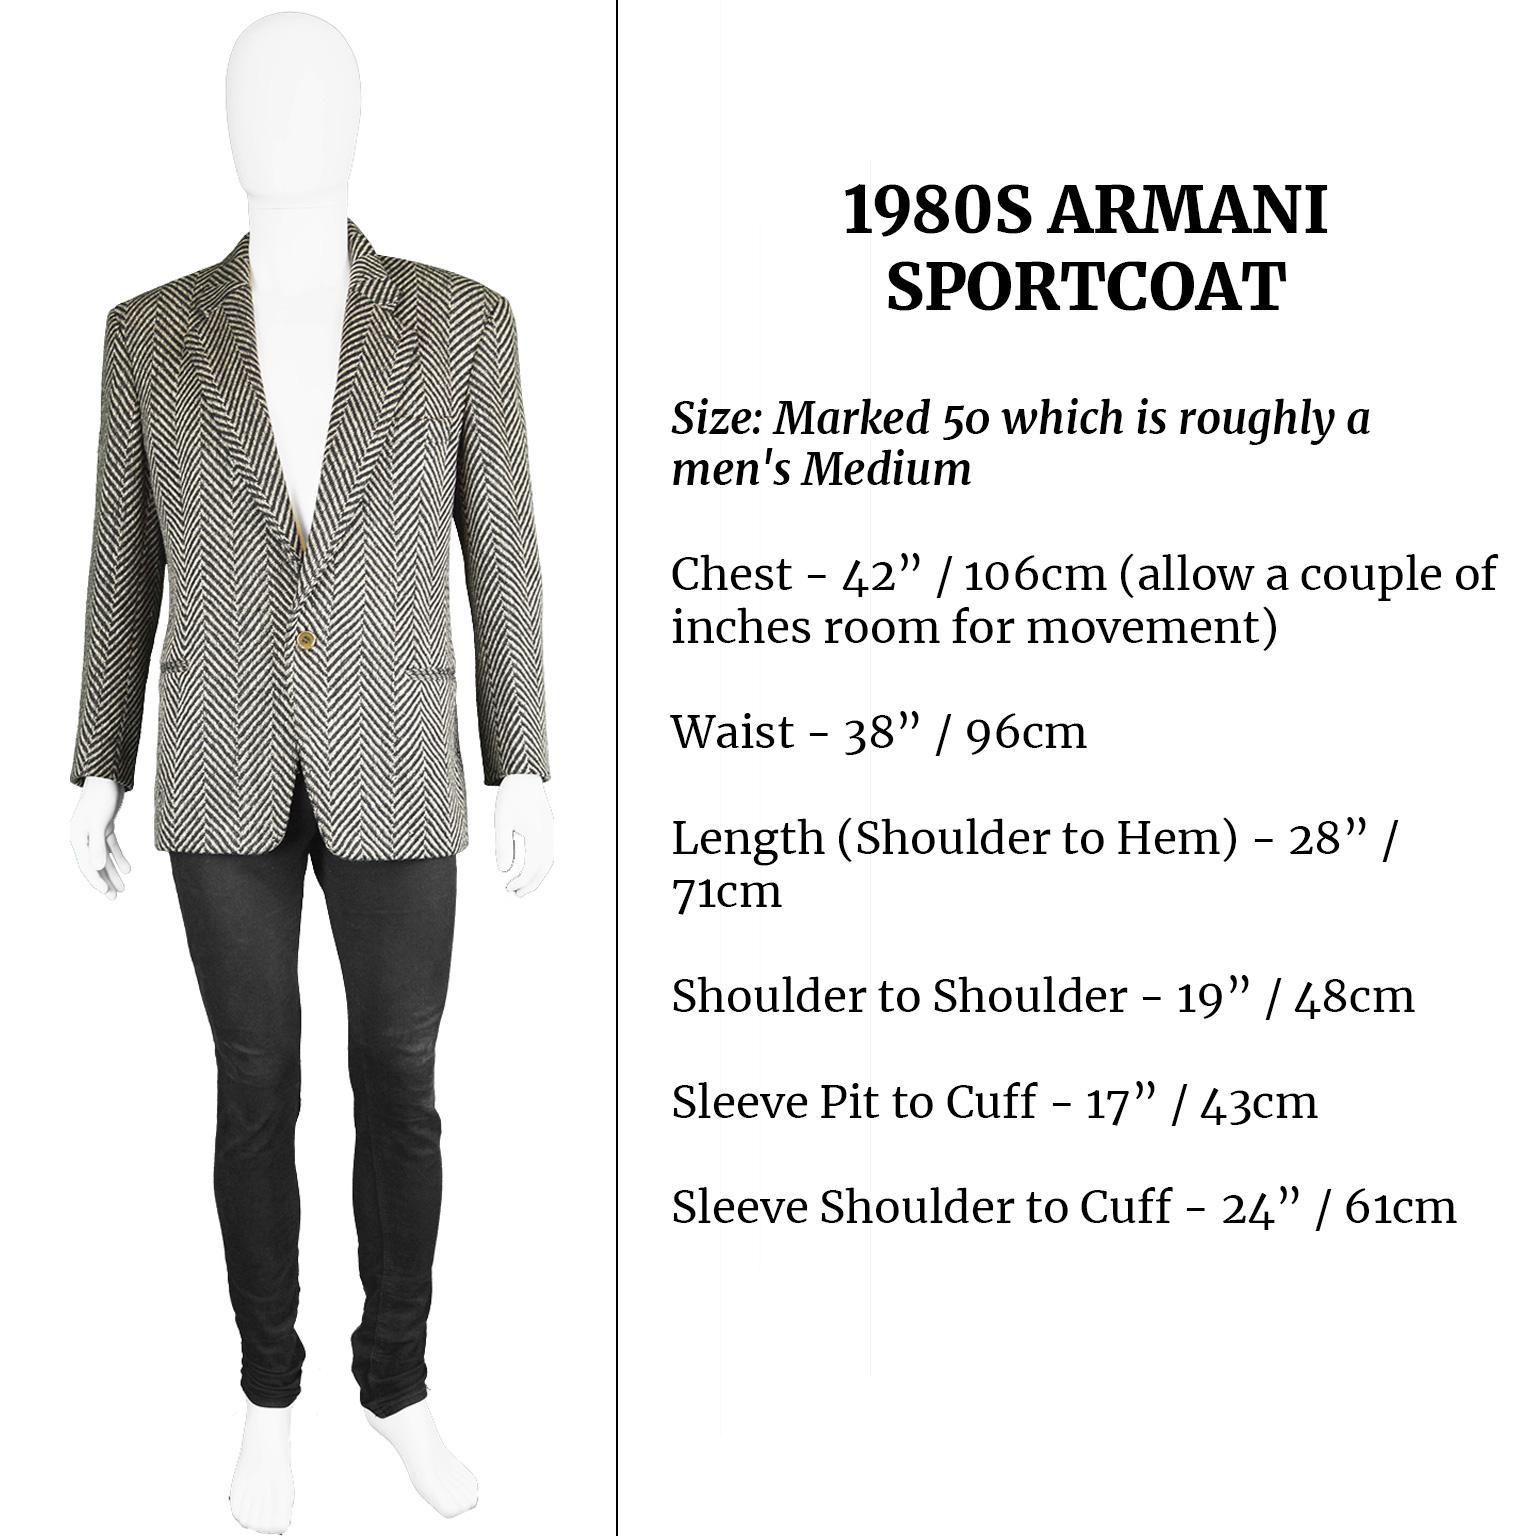 Giorgio Armani Men's Vintage Wool Herringbone Sport Coat Blazer Jacket, c. 1980s 2